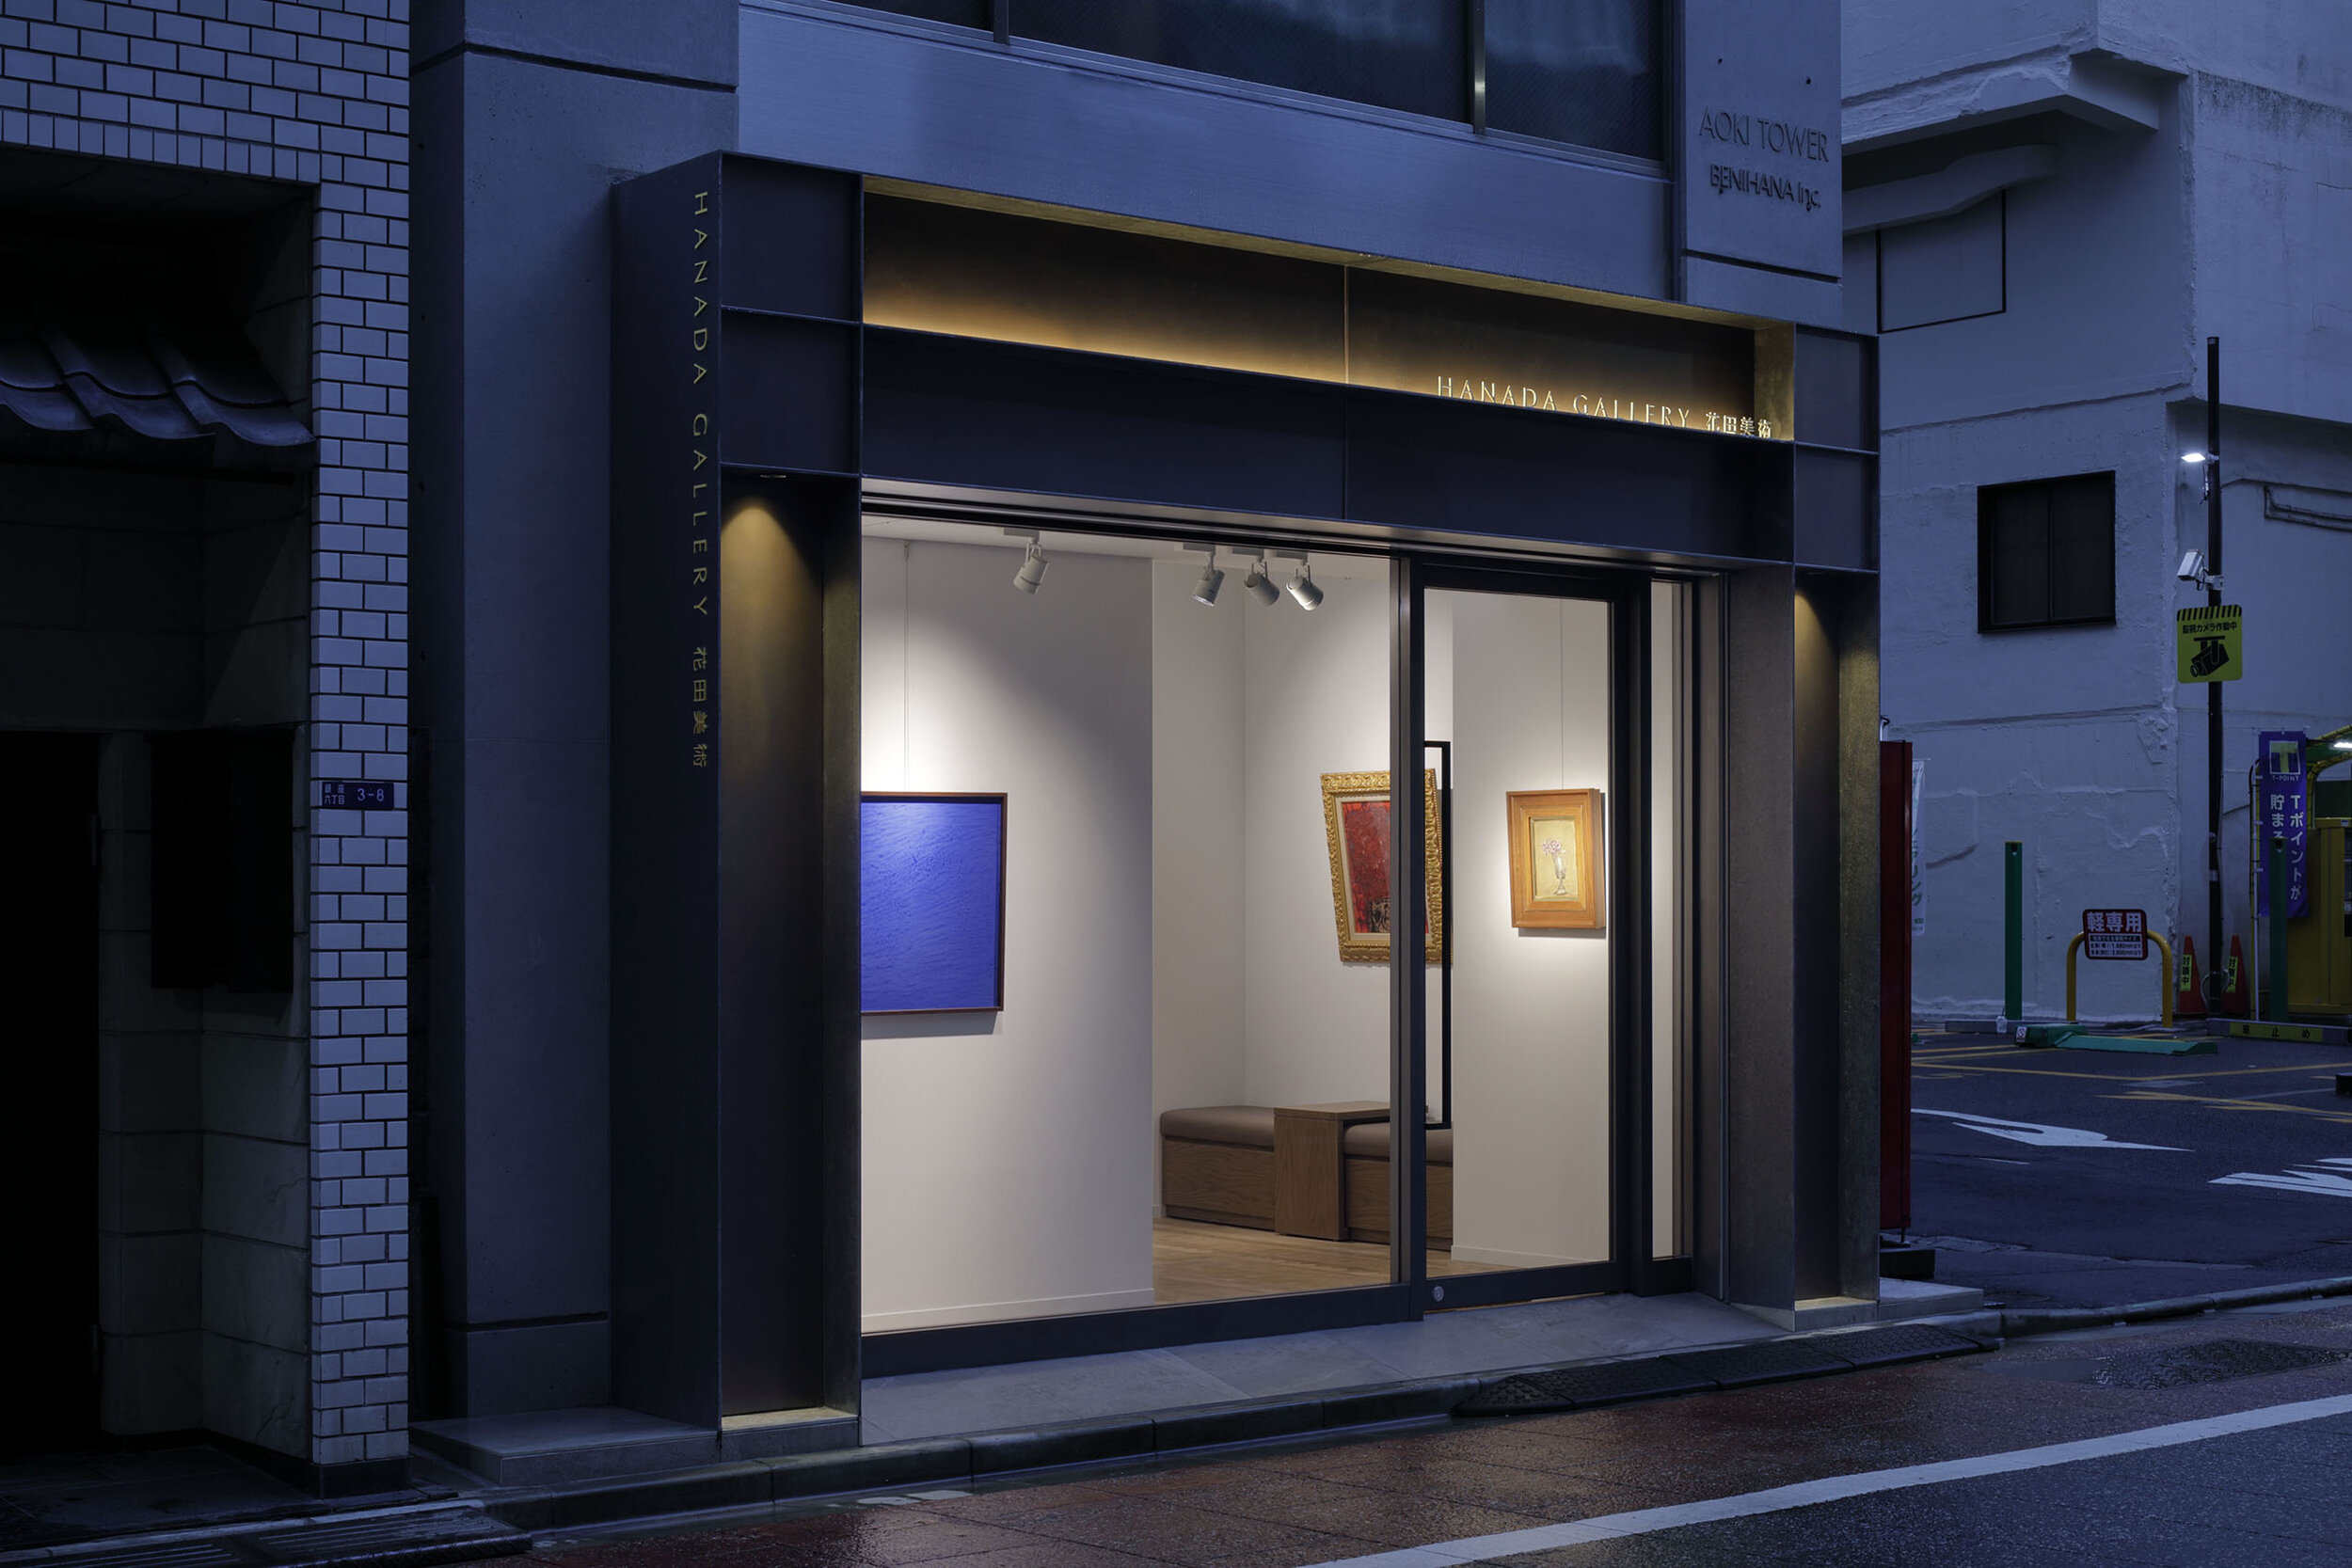  Exterior design of Hanada Gallery Ginza designed by Ryohei Kanda / Roito 